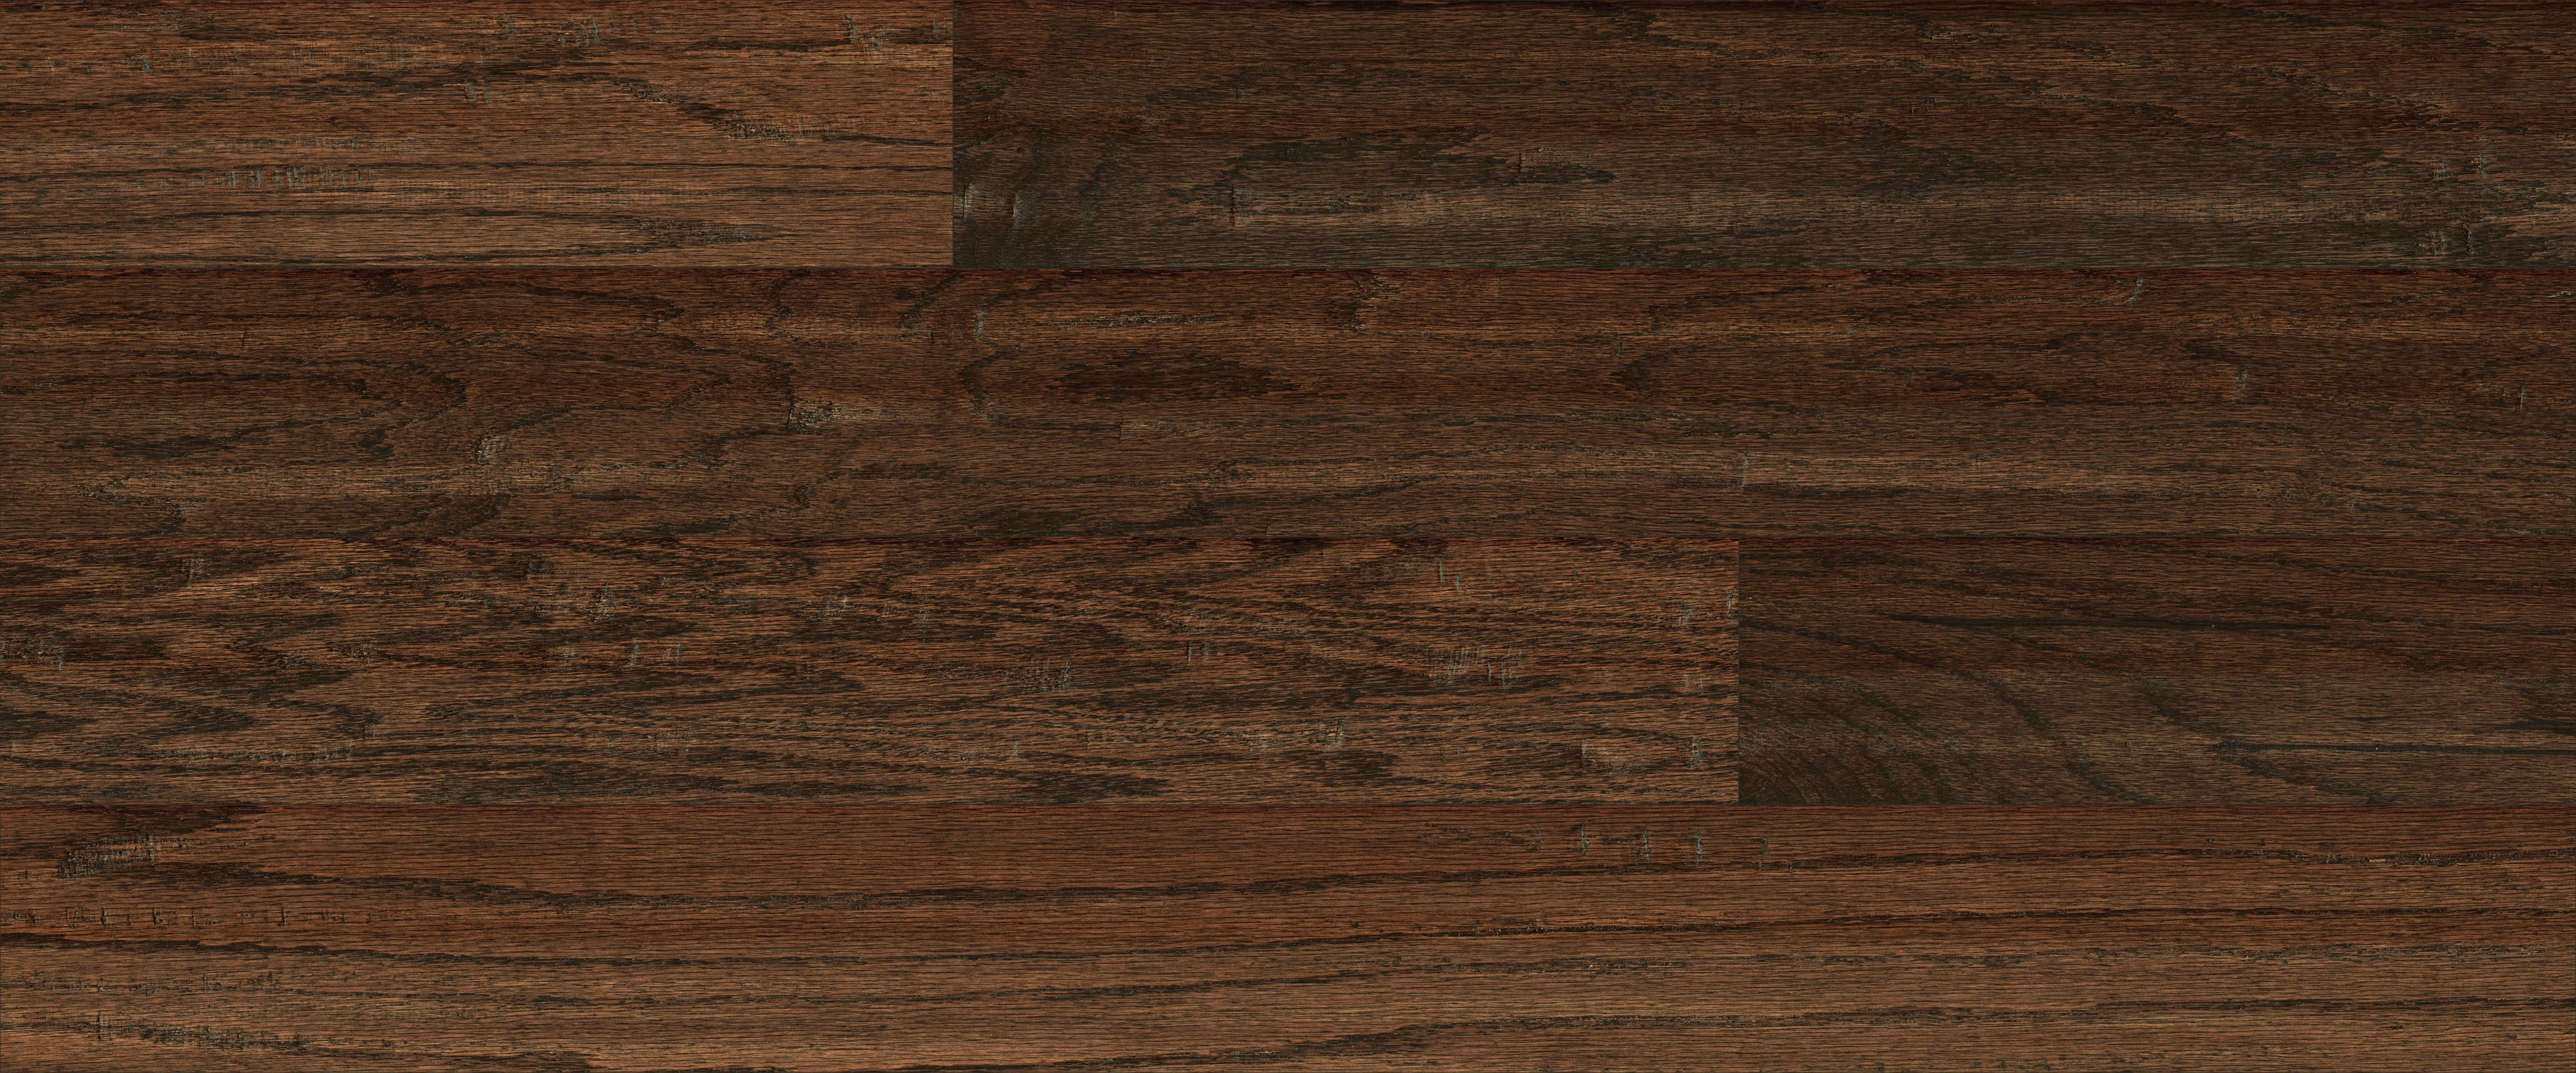 25 Ideal 5 8 Engineered Hardwood Flooring 2024 free download 5 8 engineered hardwood flooring of mullican lincolnshire sculpted red oak laredo 5 engineered hardwood for mullican lincolnshire sculpted red oak laredo 5 engineered hardwood flooring